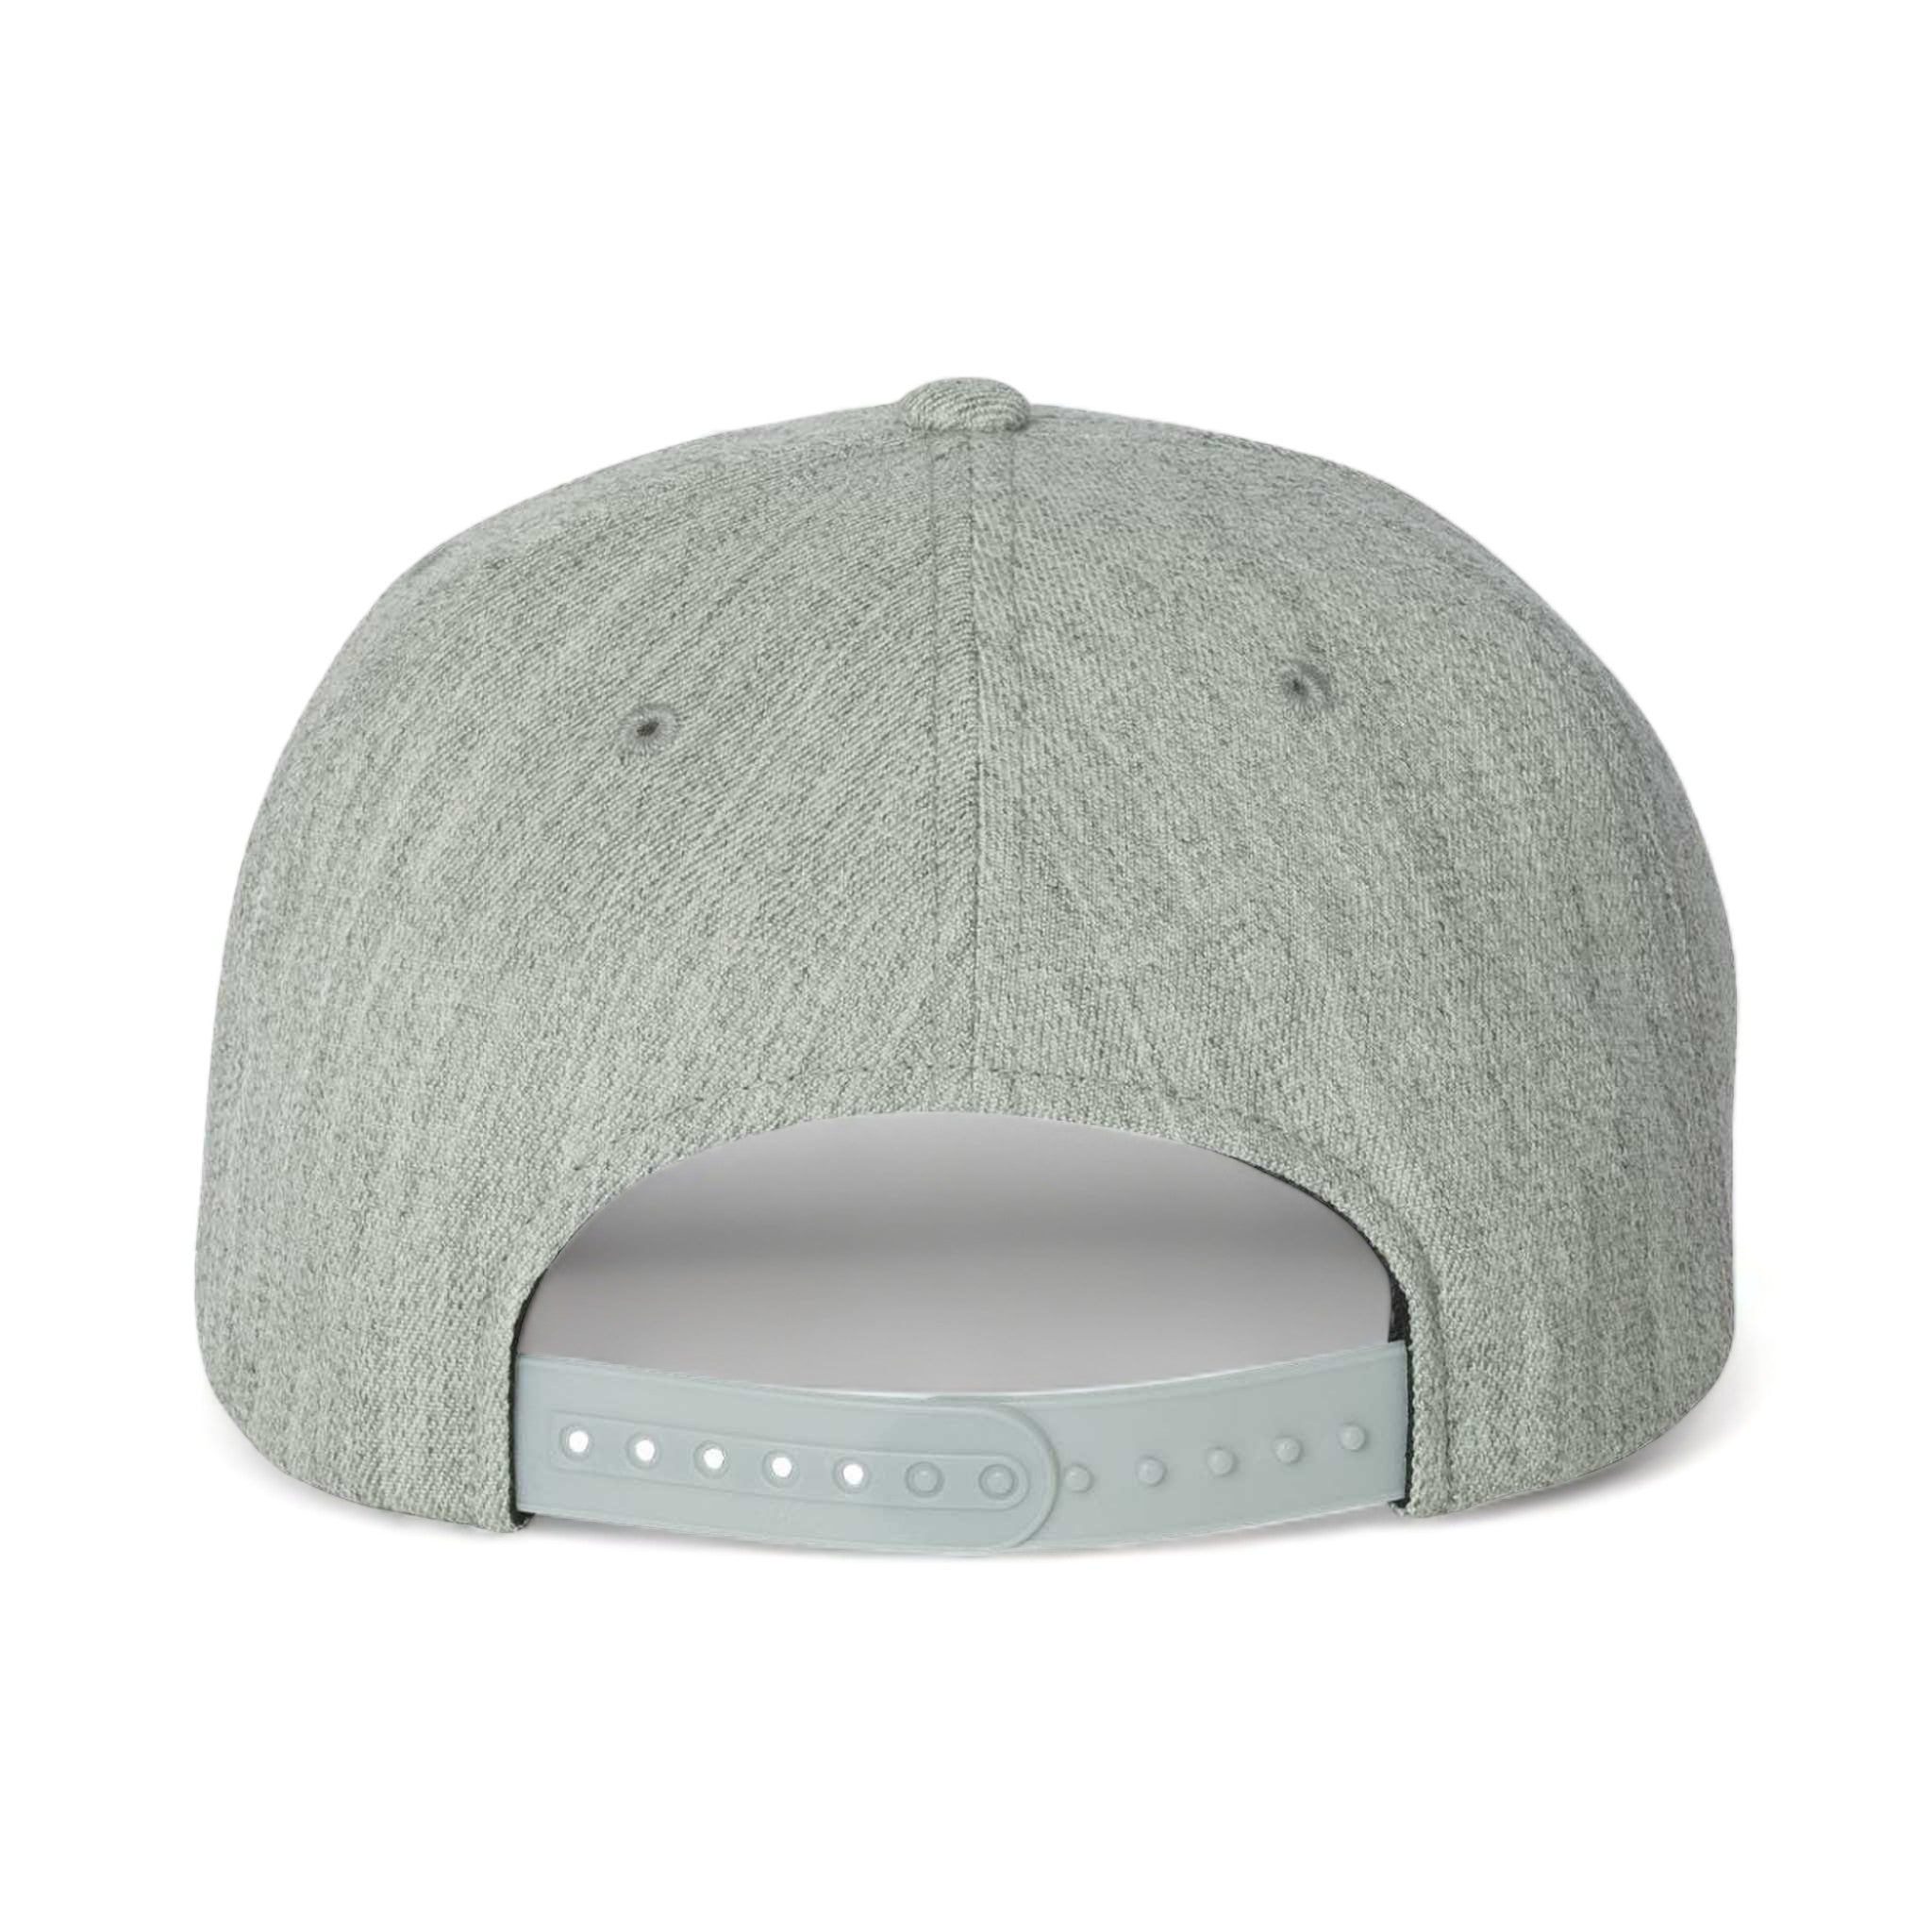 Back view of Flexfit 110F custom hat in heather grey